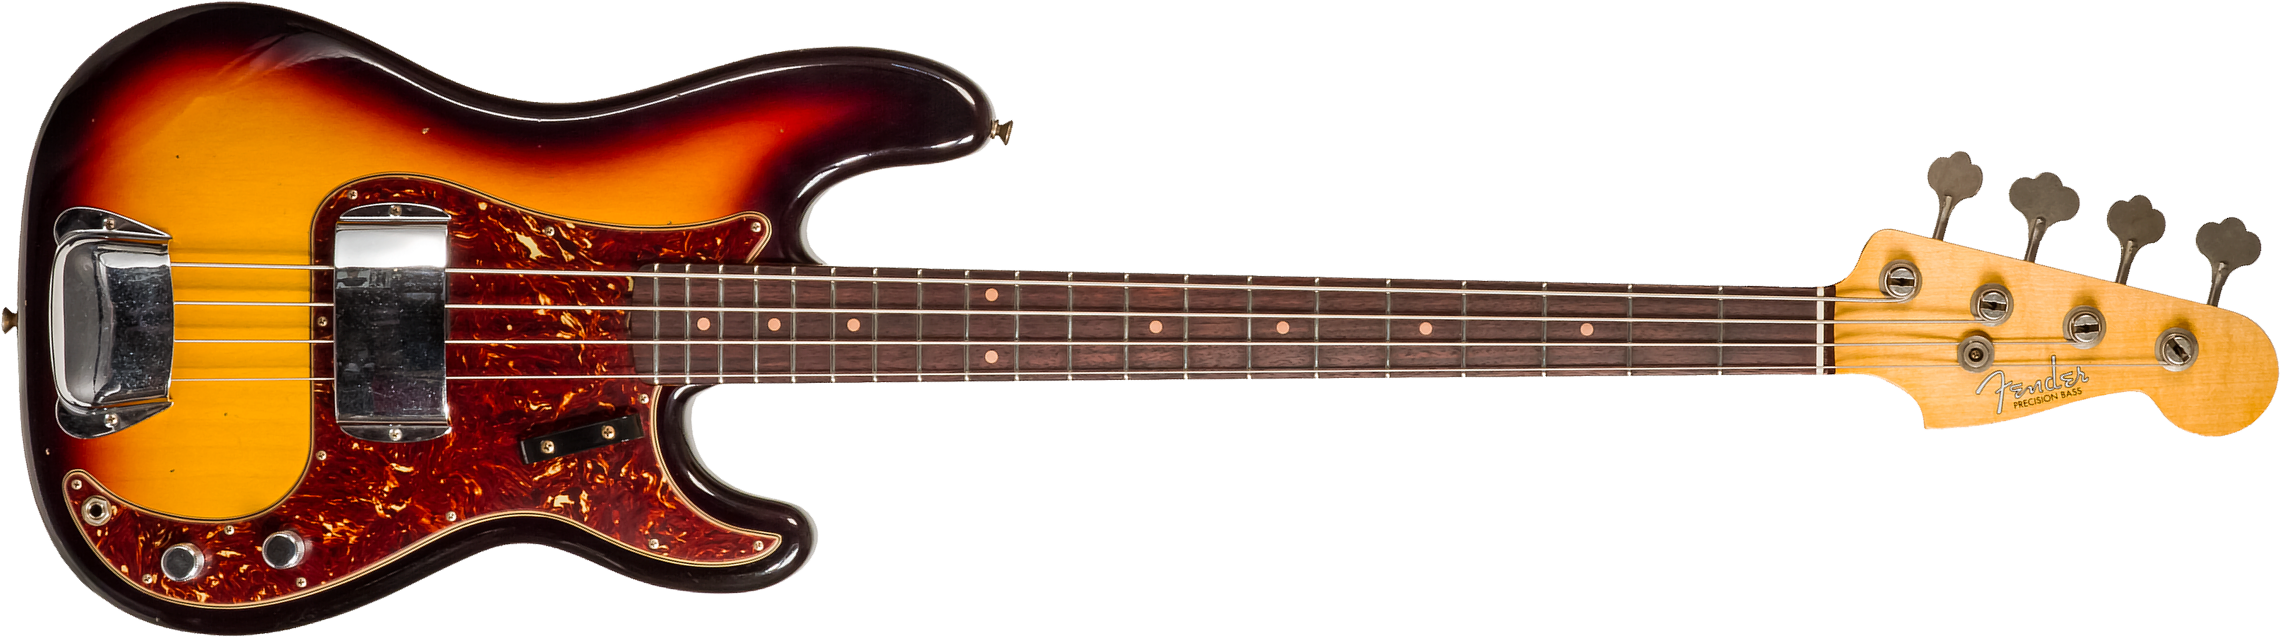 Fender Custom Shop Precision Bass 1963 Rw #cz56919 - Journeyman Relic 3-color Sunburst - Bajo eléctrico de cuerpo sólido - Main picture